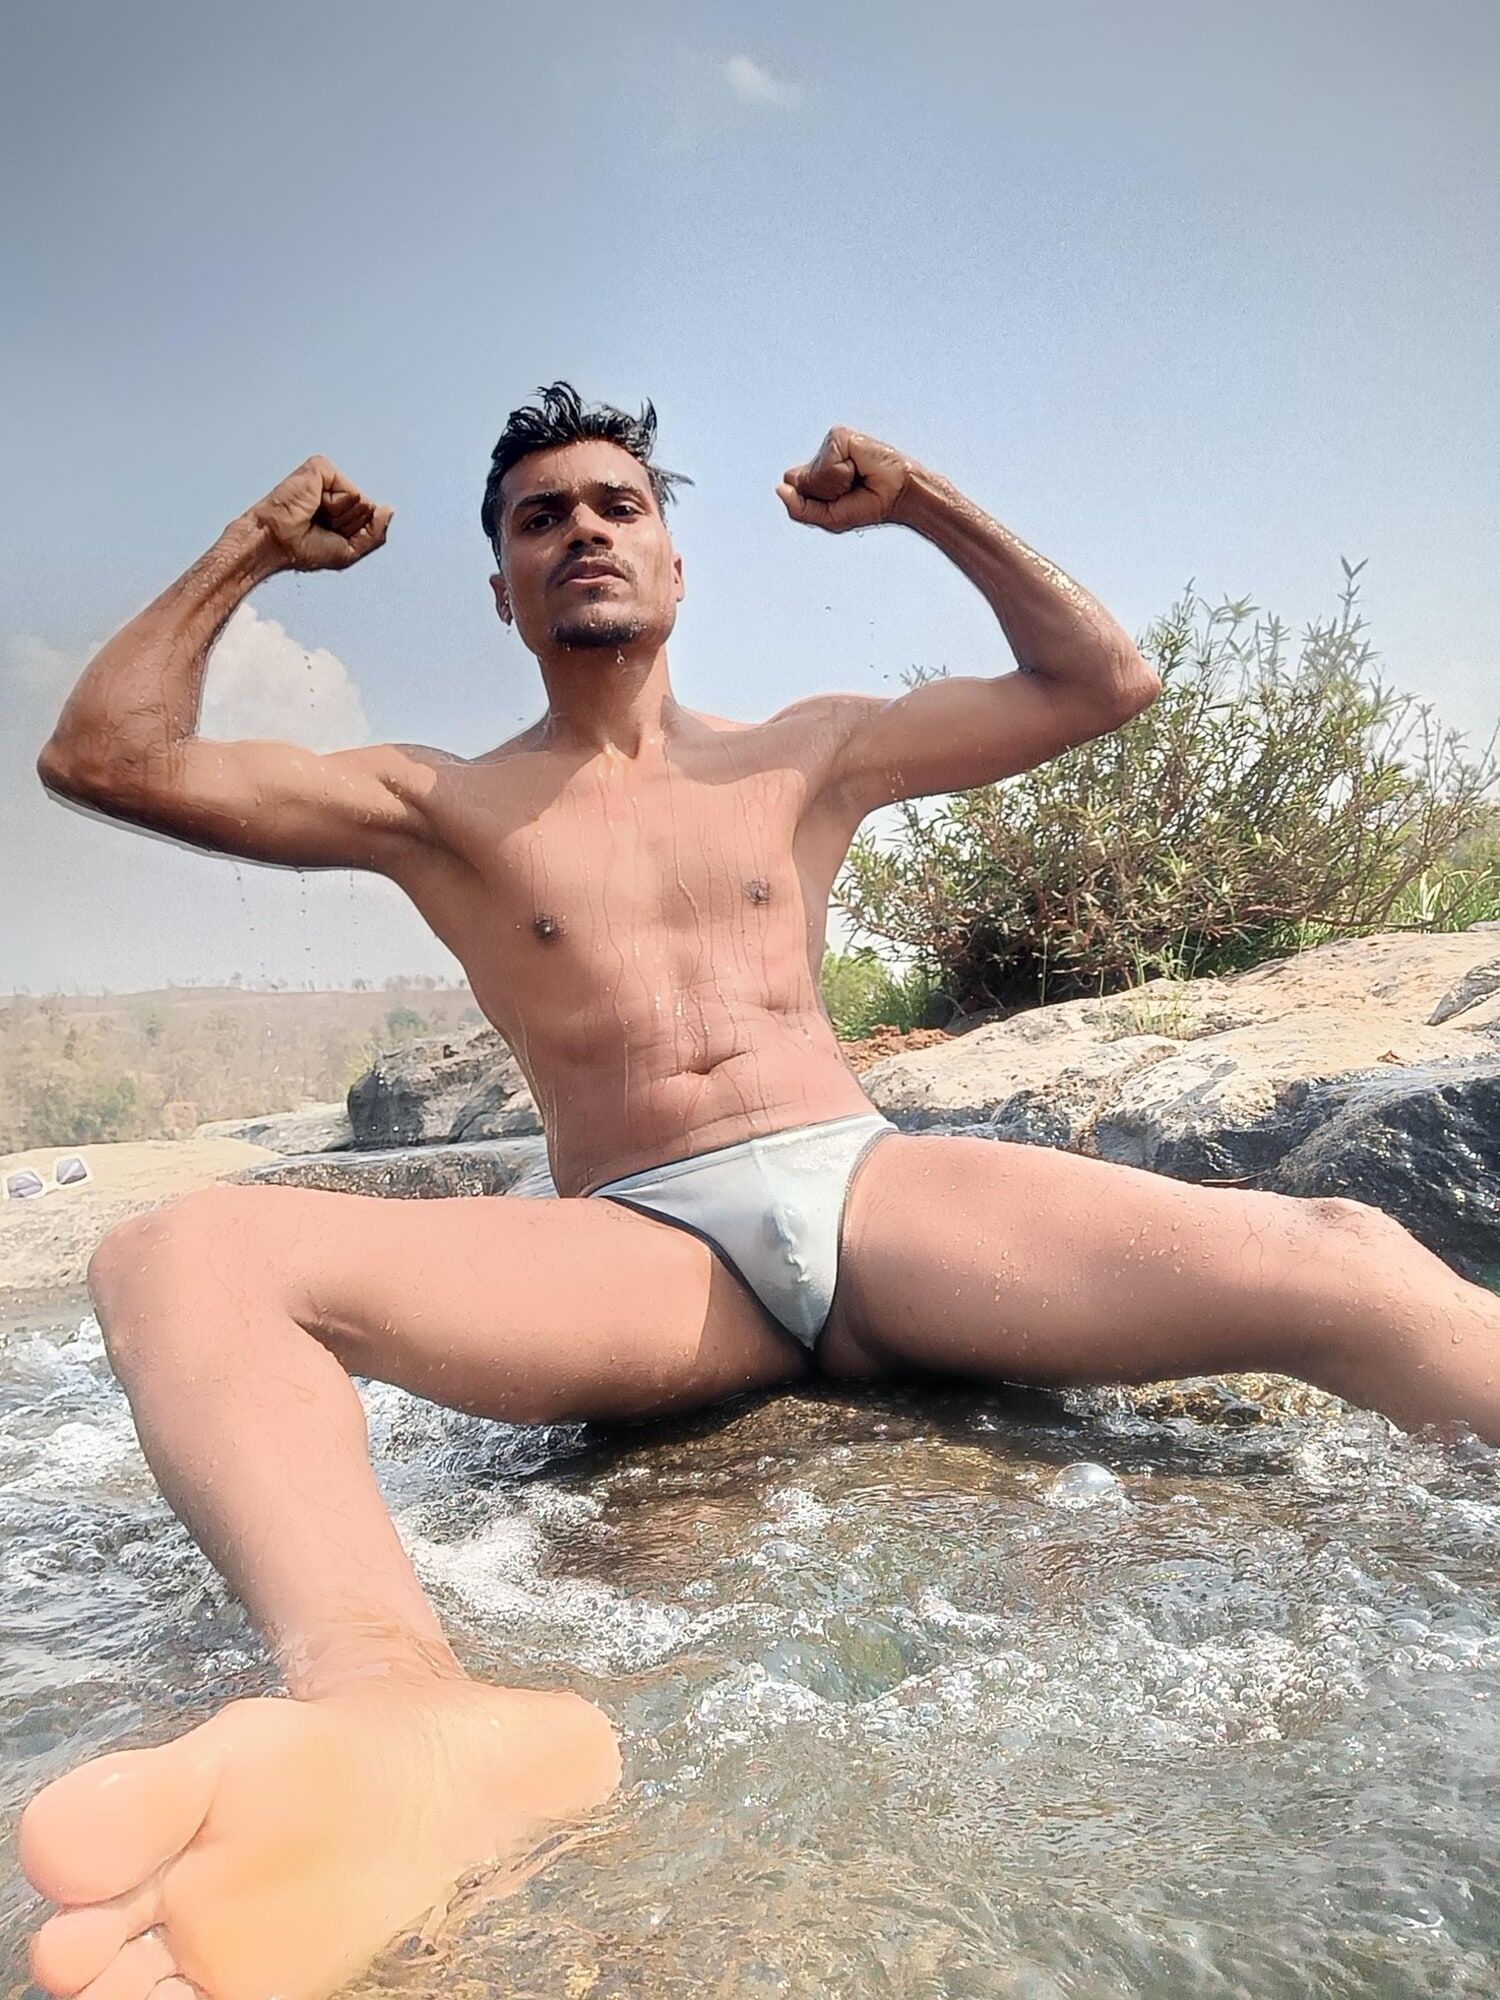 Hot muscular gym boy outdoor in river bathing enjoying swimm #21